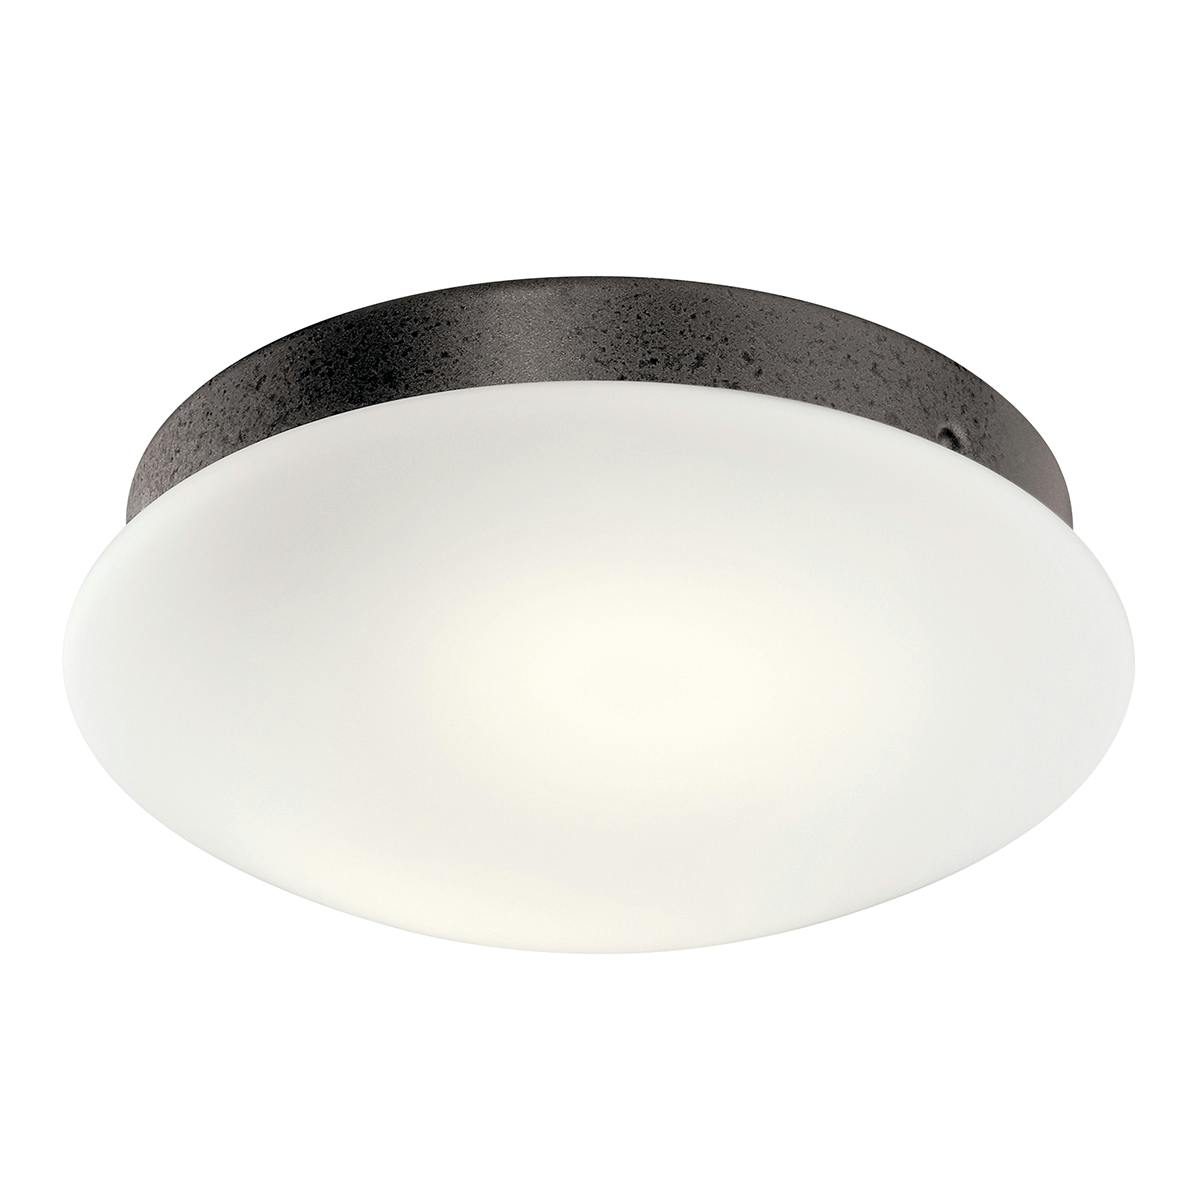 Ried™ LED Fan Light Kit Anvil Iron on a white background